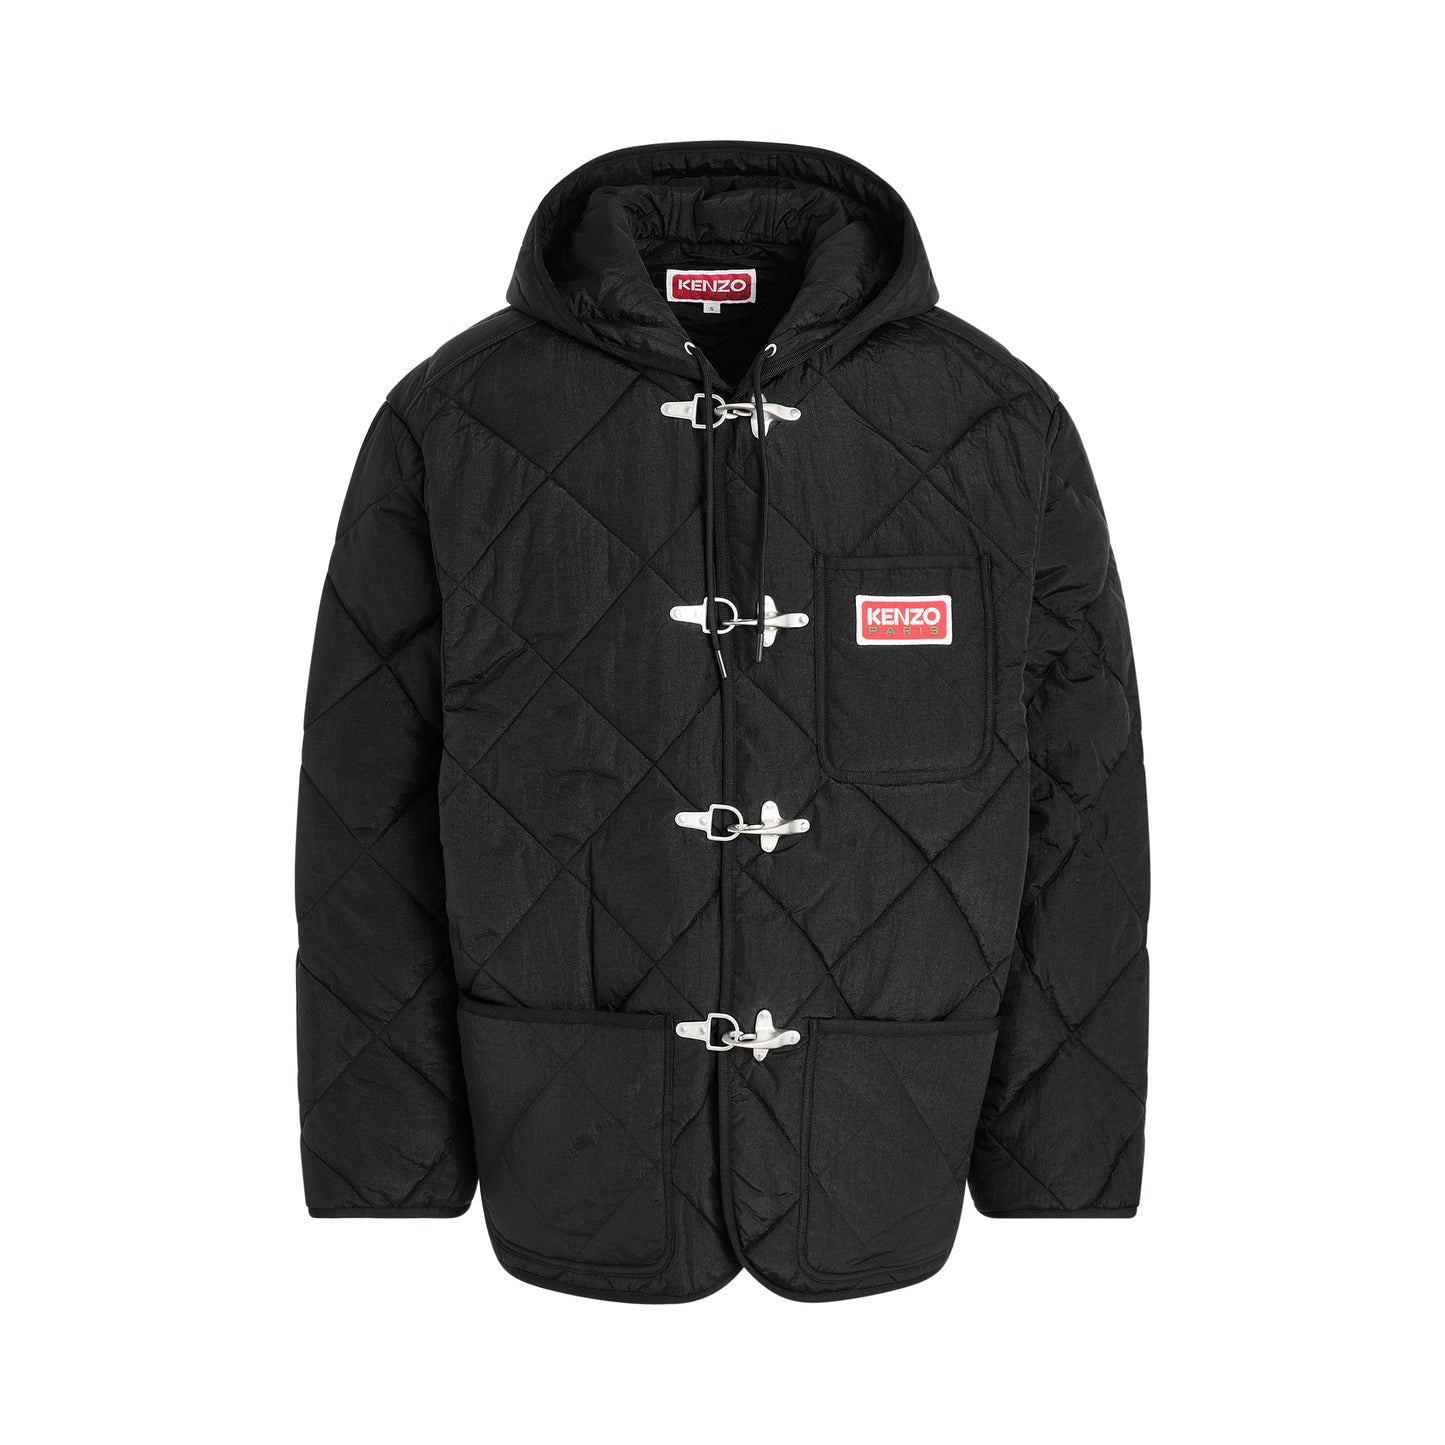 Quilted Liner Jacket in Black